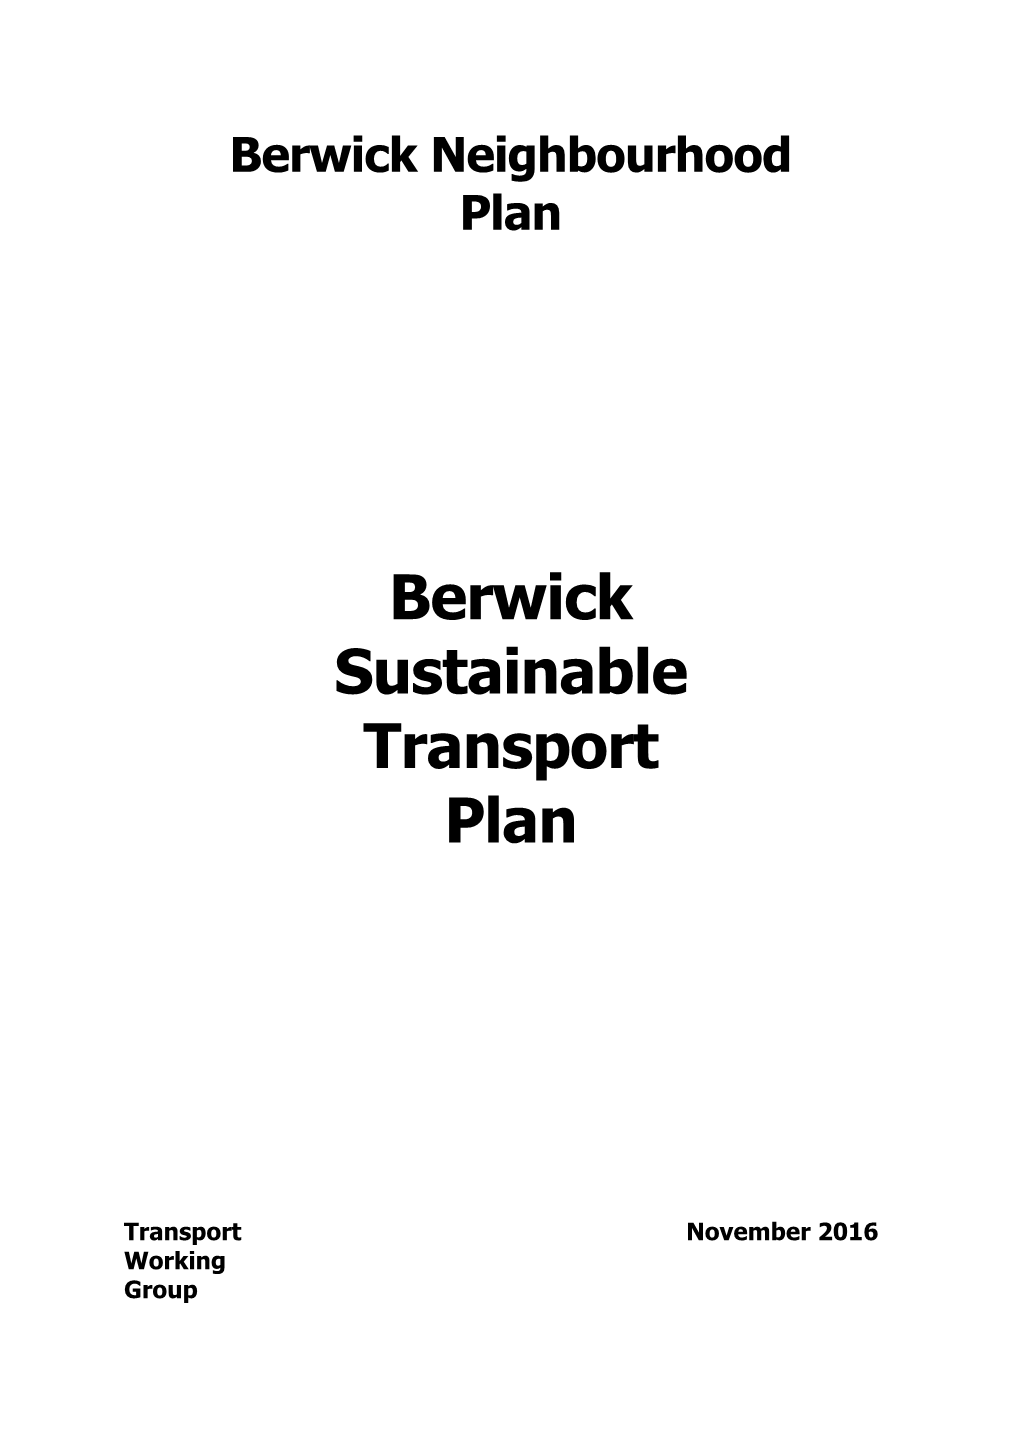 Berwick Sustainable Transport Plan